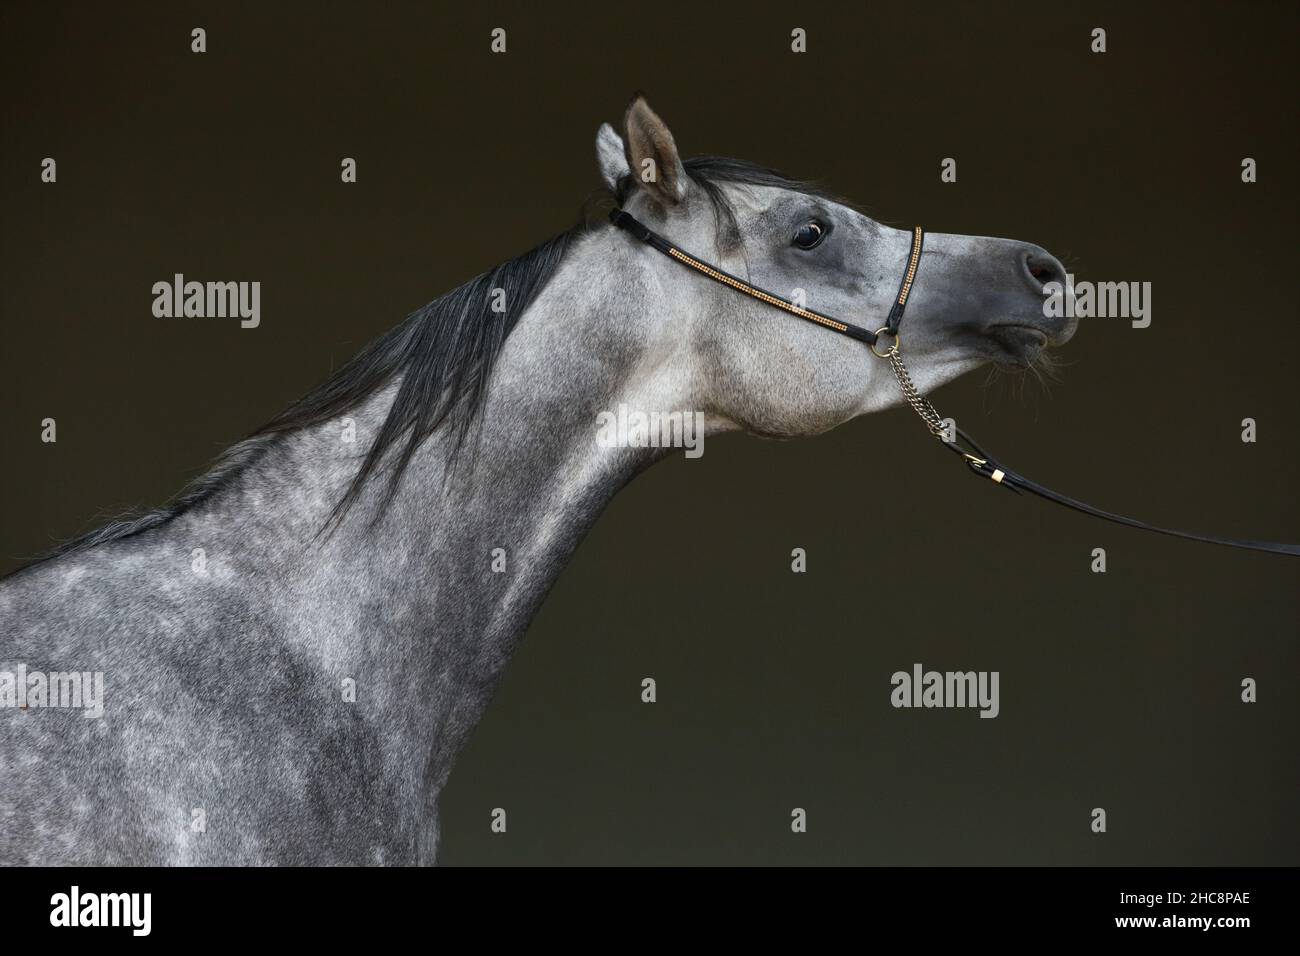 Arabian horse portrait against dark stable background Stock Photo